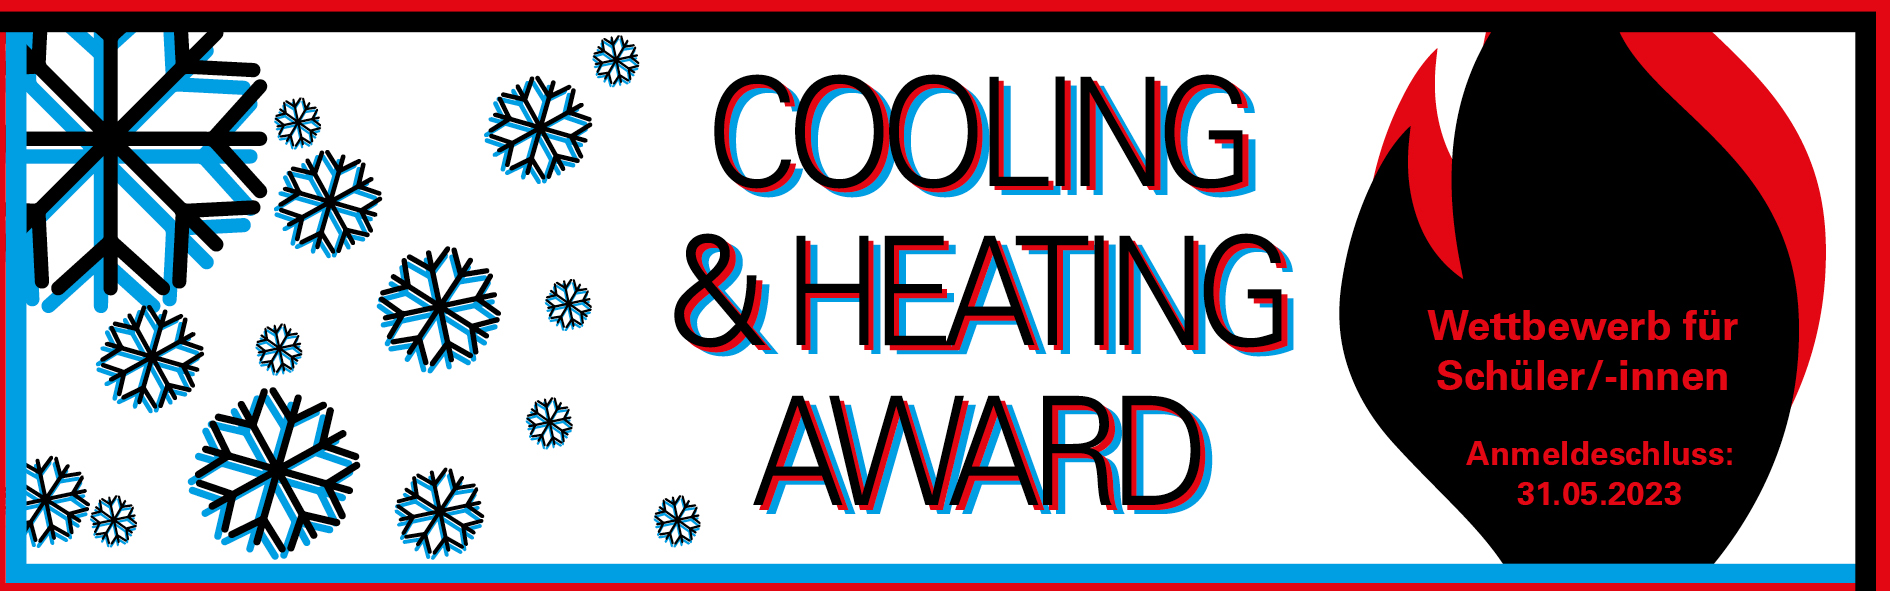 ostfalia-cooling-heating-award-2023